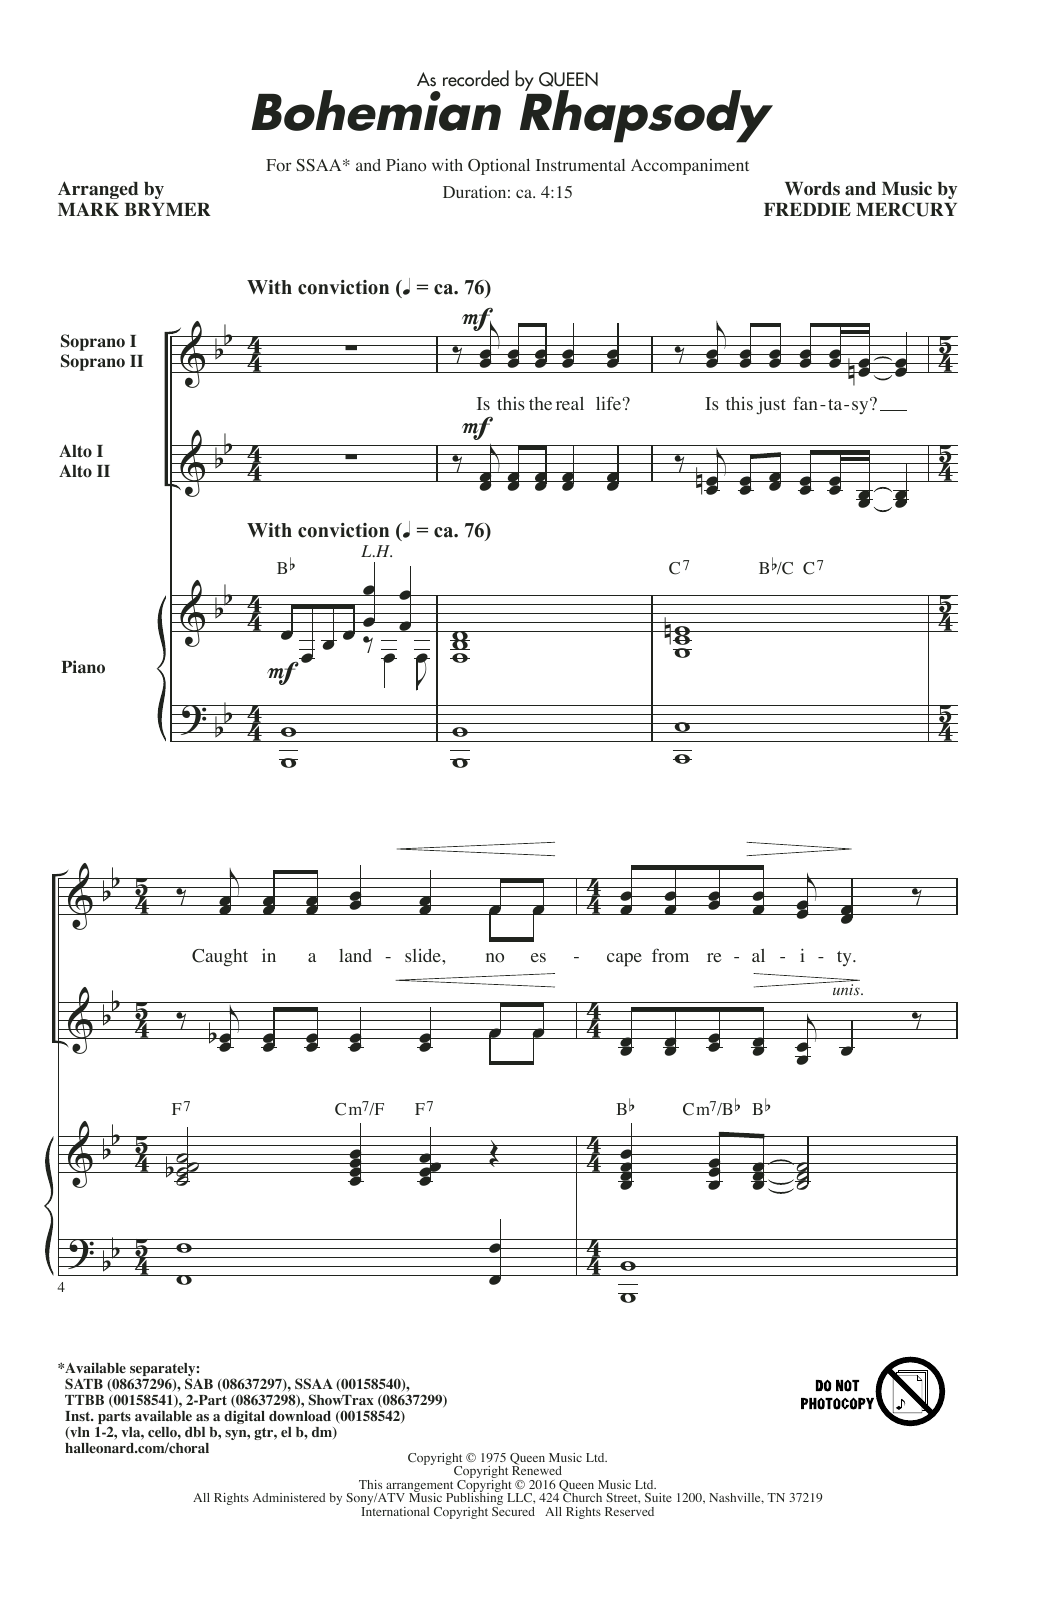 Queen Bohemian Rhapsody (arr. Mark Brymer) Sheet Music Notes & Chords for TTBB Choir - Download or Print PDF